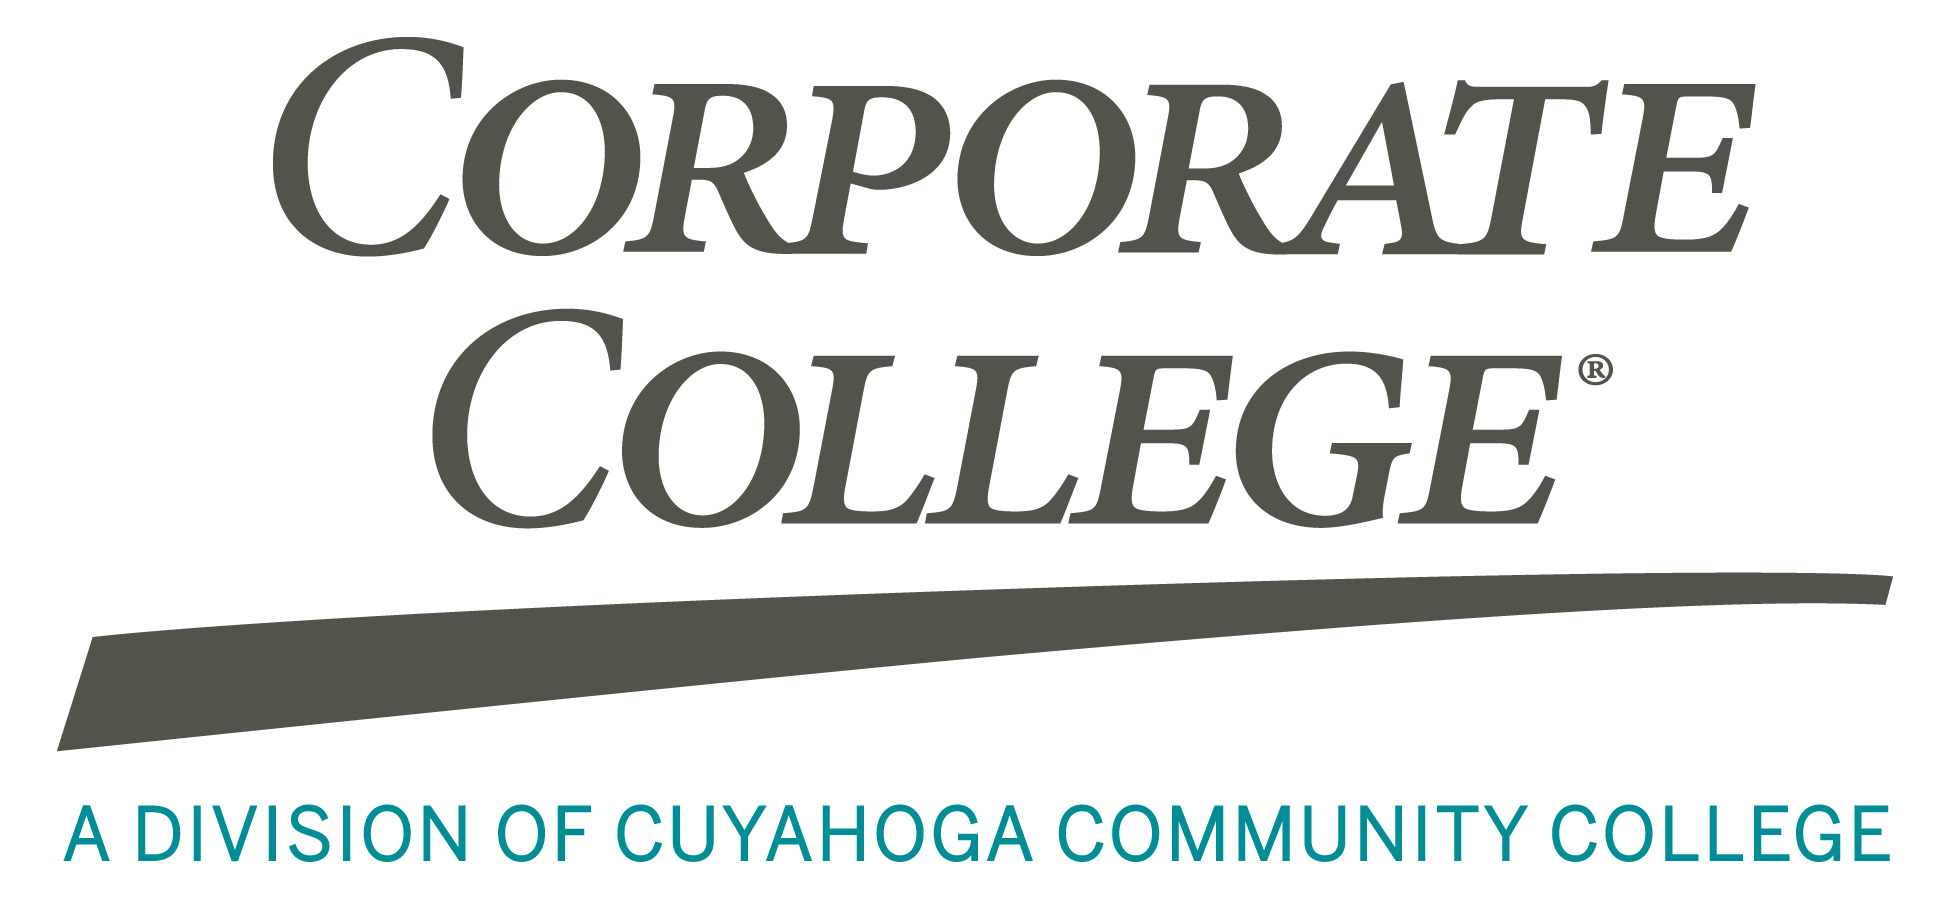 Corporate College logo